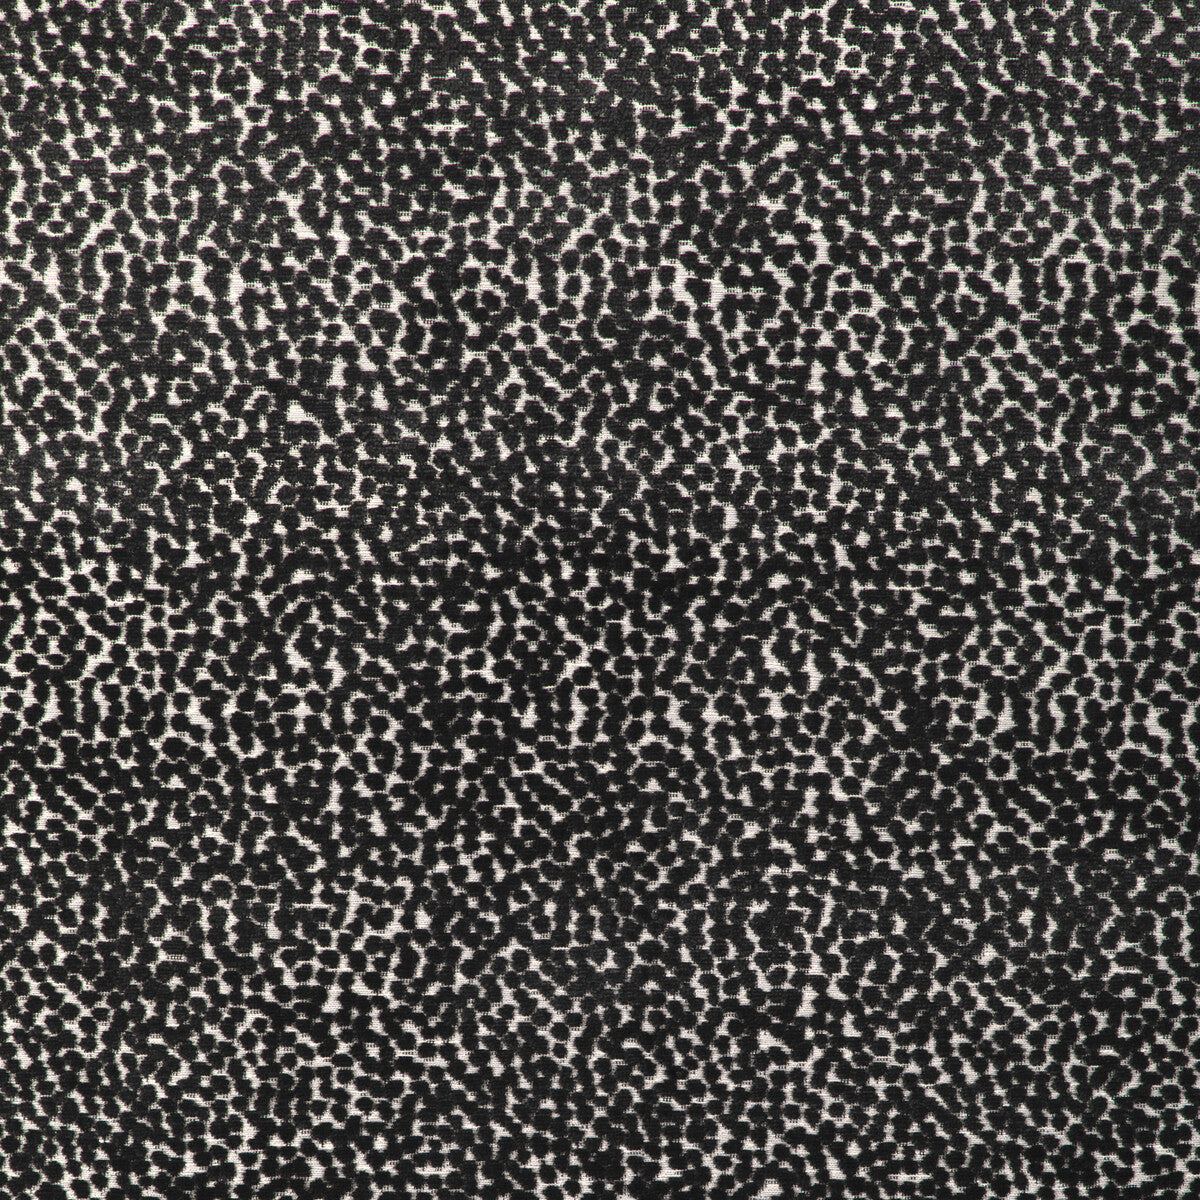 Kravet Design fabric in 36988-8 color - pattern 36988.8.0 - by Kravet Design in the Modern Velvets collection